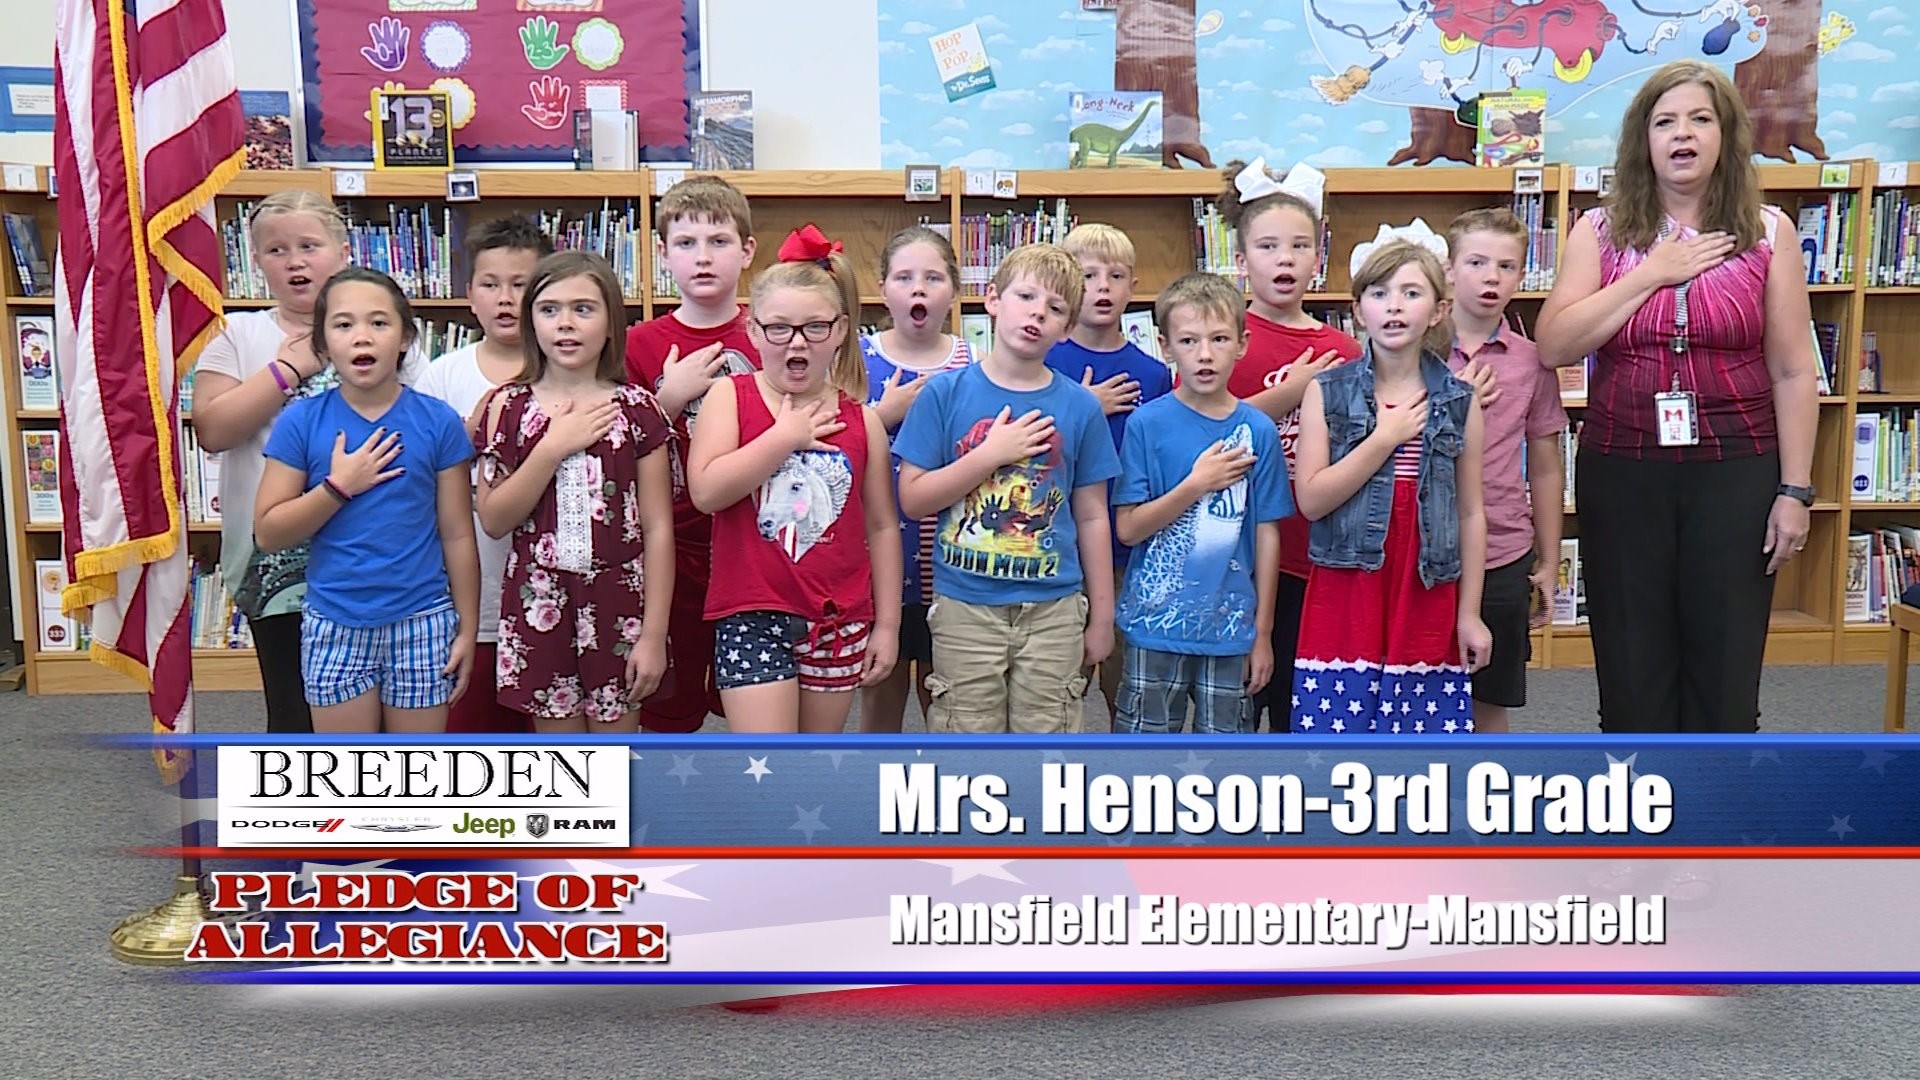 Mrs. Henson  3rd Grade Mansfield Elementary, Mansfield